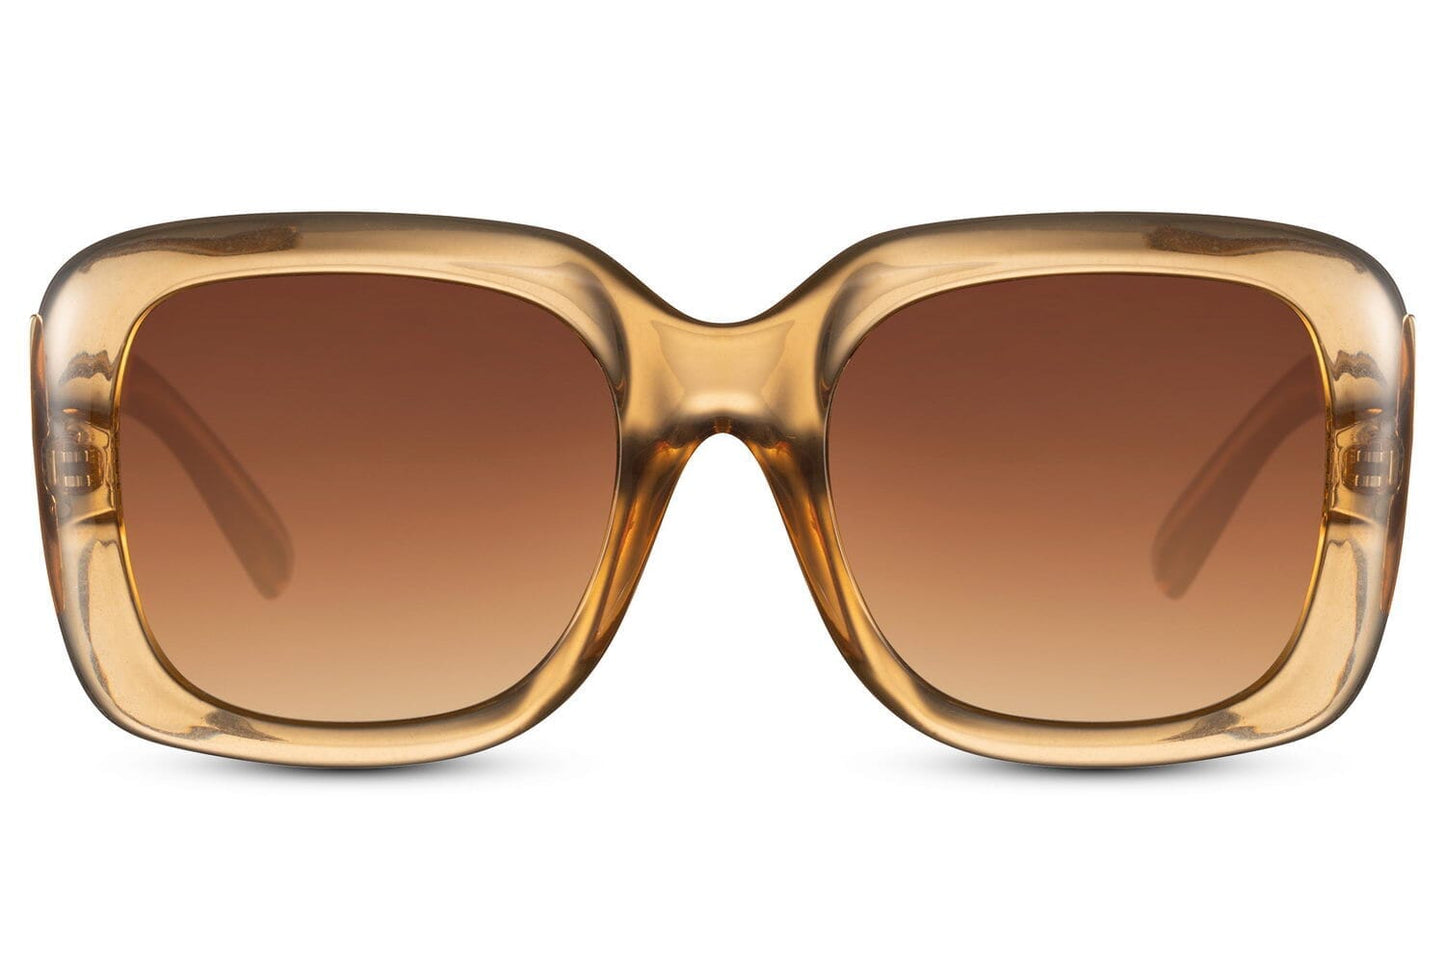 Square acetate sunglasses. Brown lenses. UV400 protected.